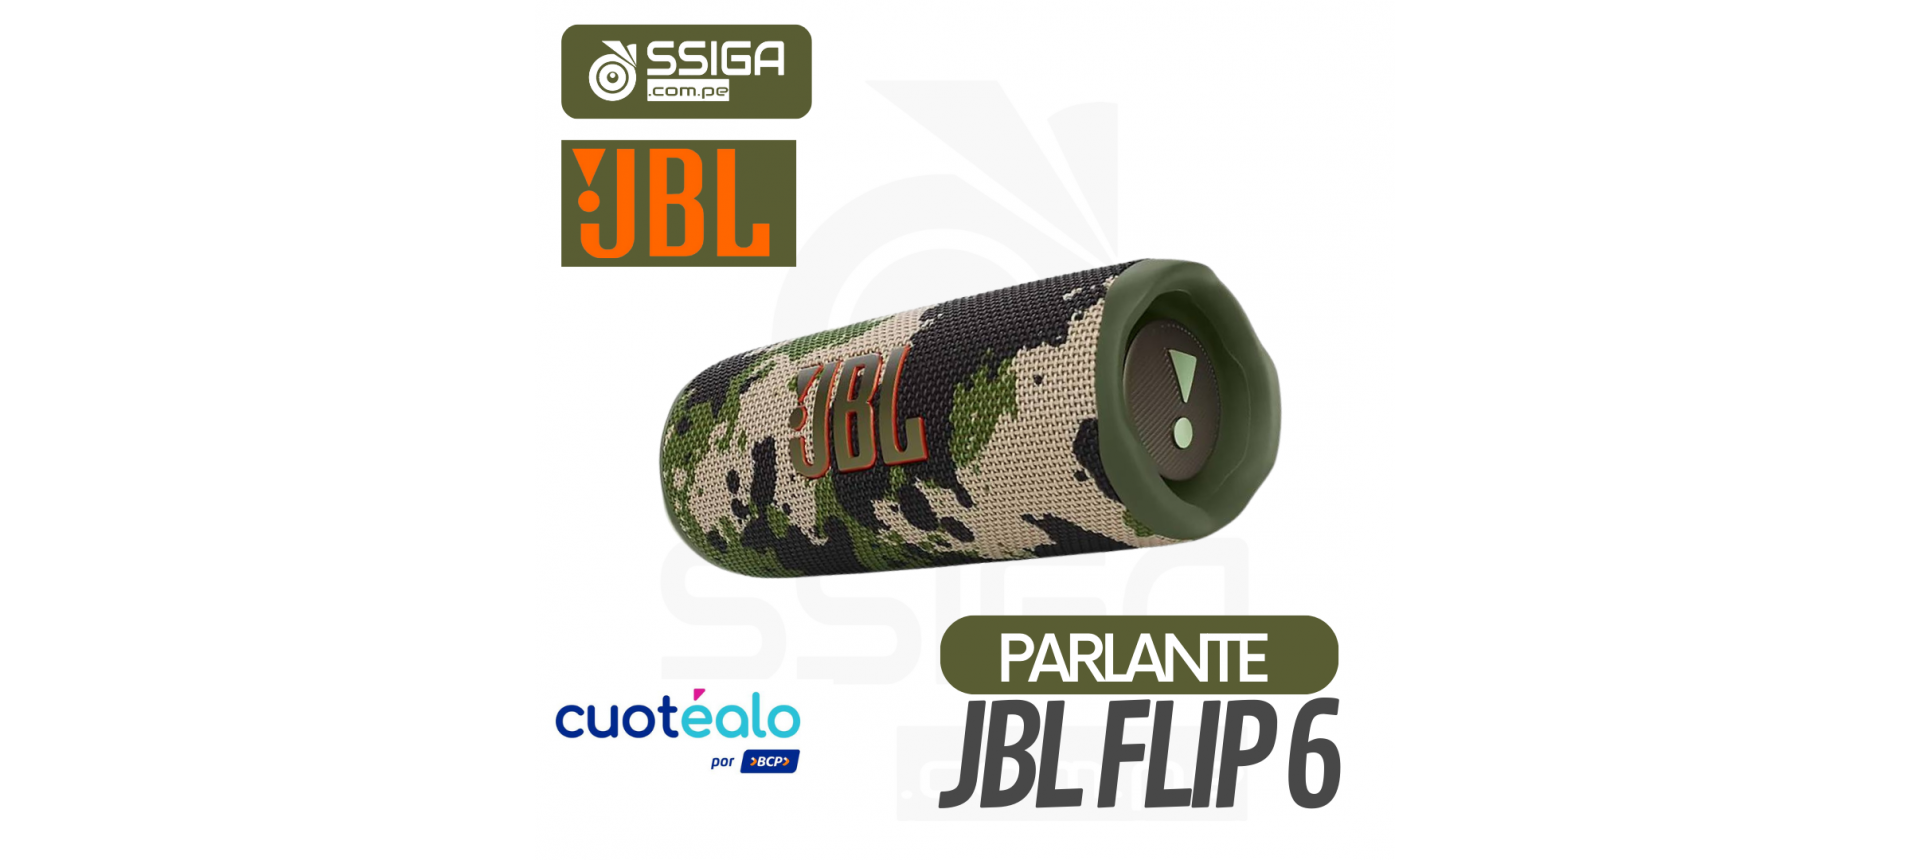 JBL FLIP 6 PARLANTE BLUETOOH – Ventas Guate